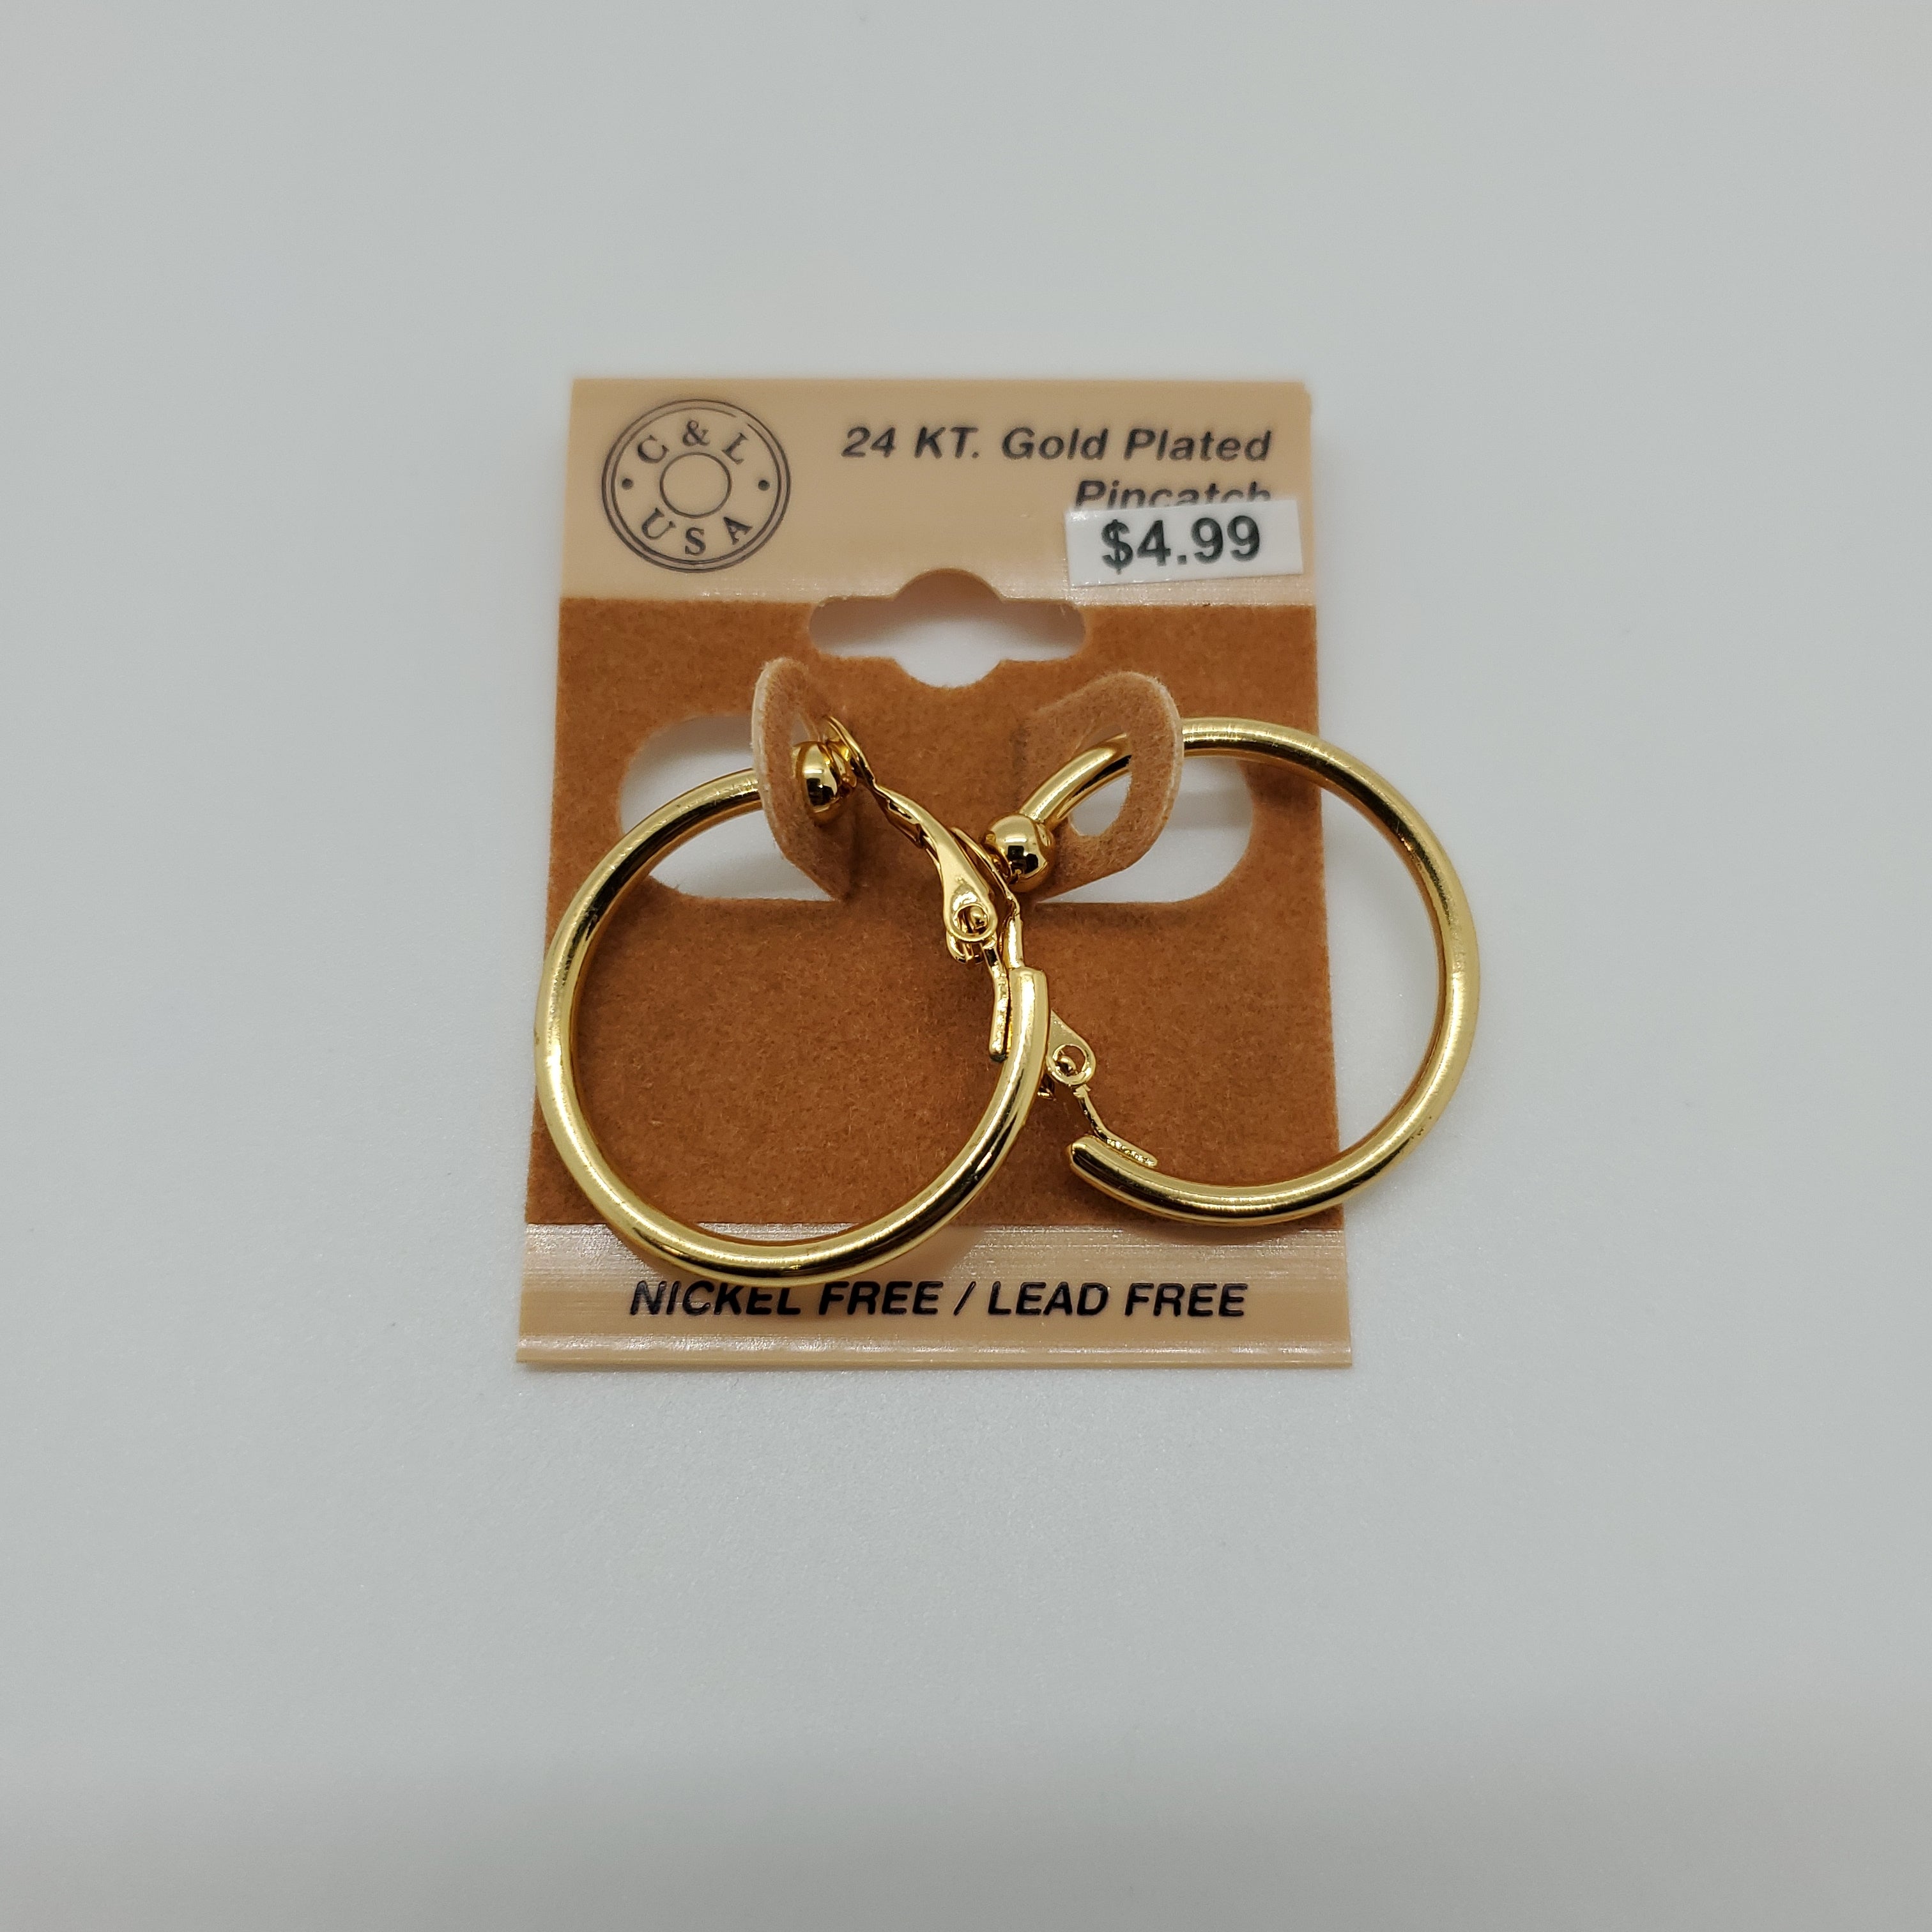 24KT Gold Plated Clip On Hoop Earrings NPK202 - Beauty Bar & Supply